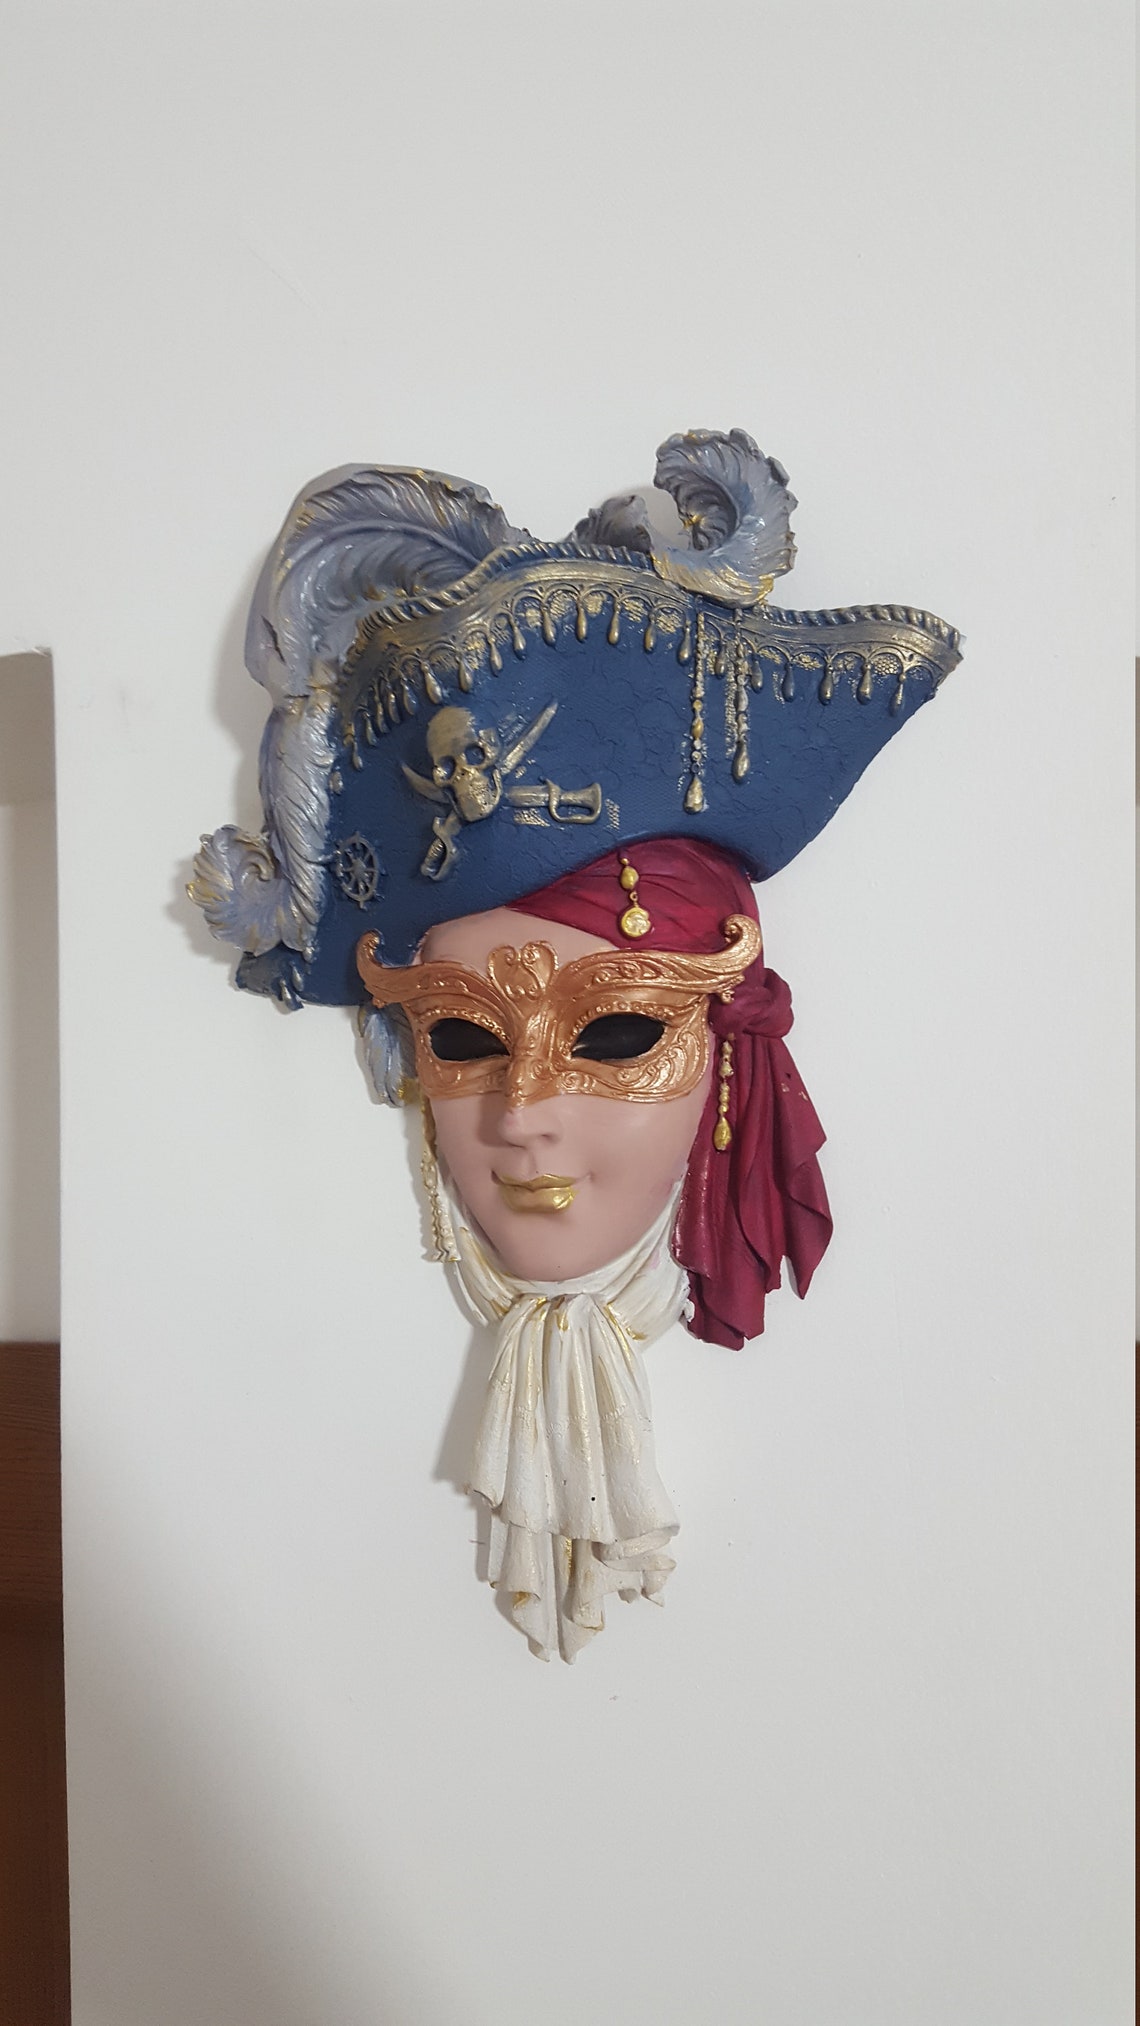 Wall Statue Sculpture Venetian Mask Woman Handmade Painting - Etsy